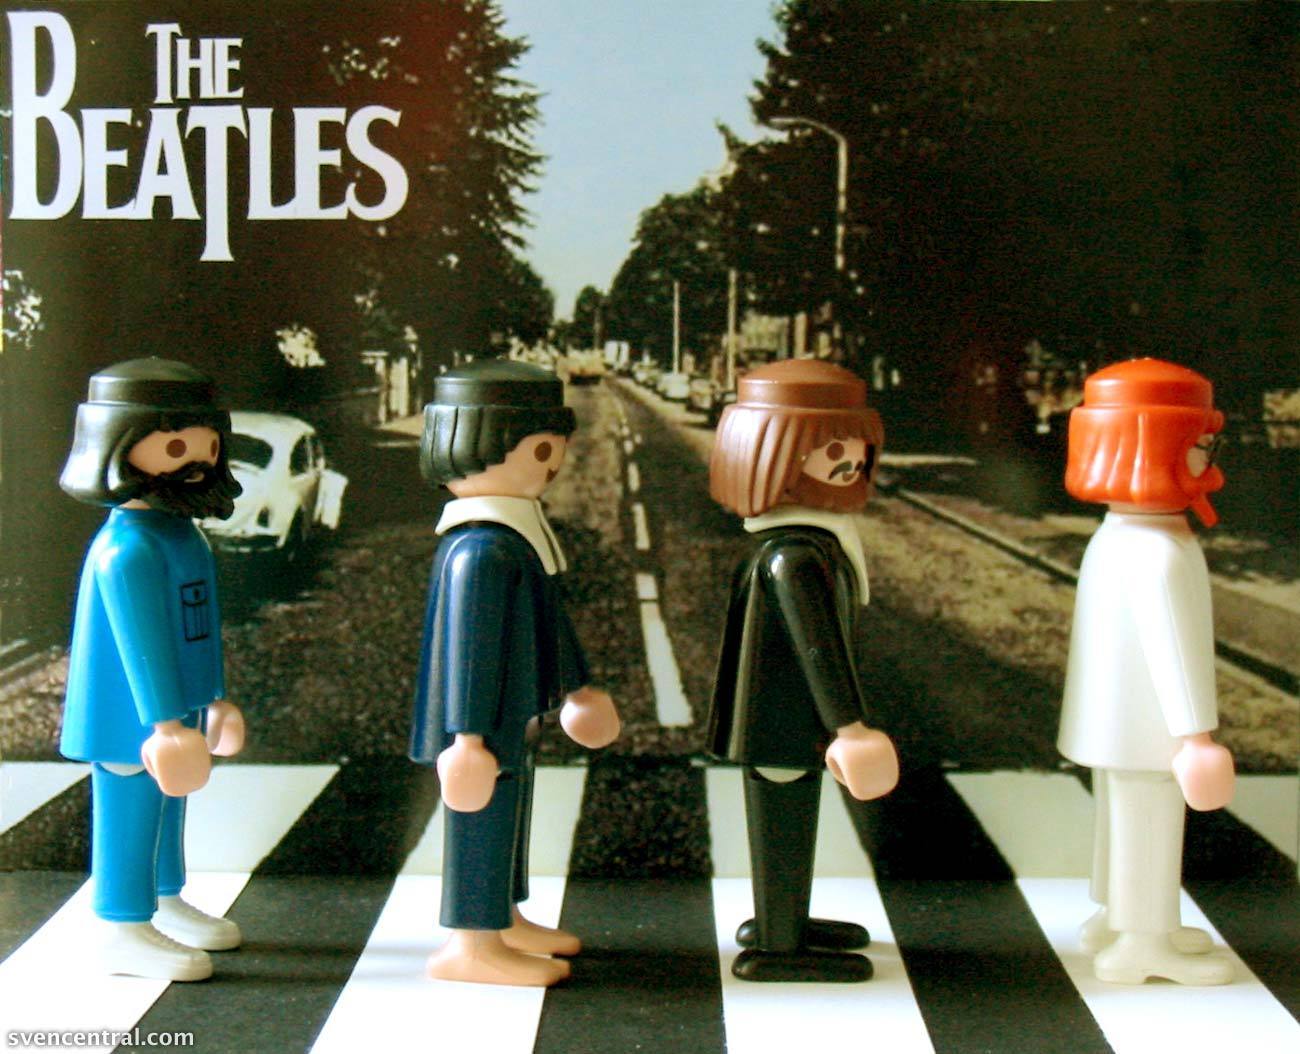 The Beatles Wallpaper Art By Treybear13 - The Beatles Photo ...